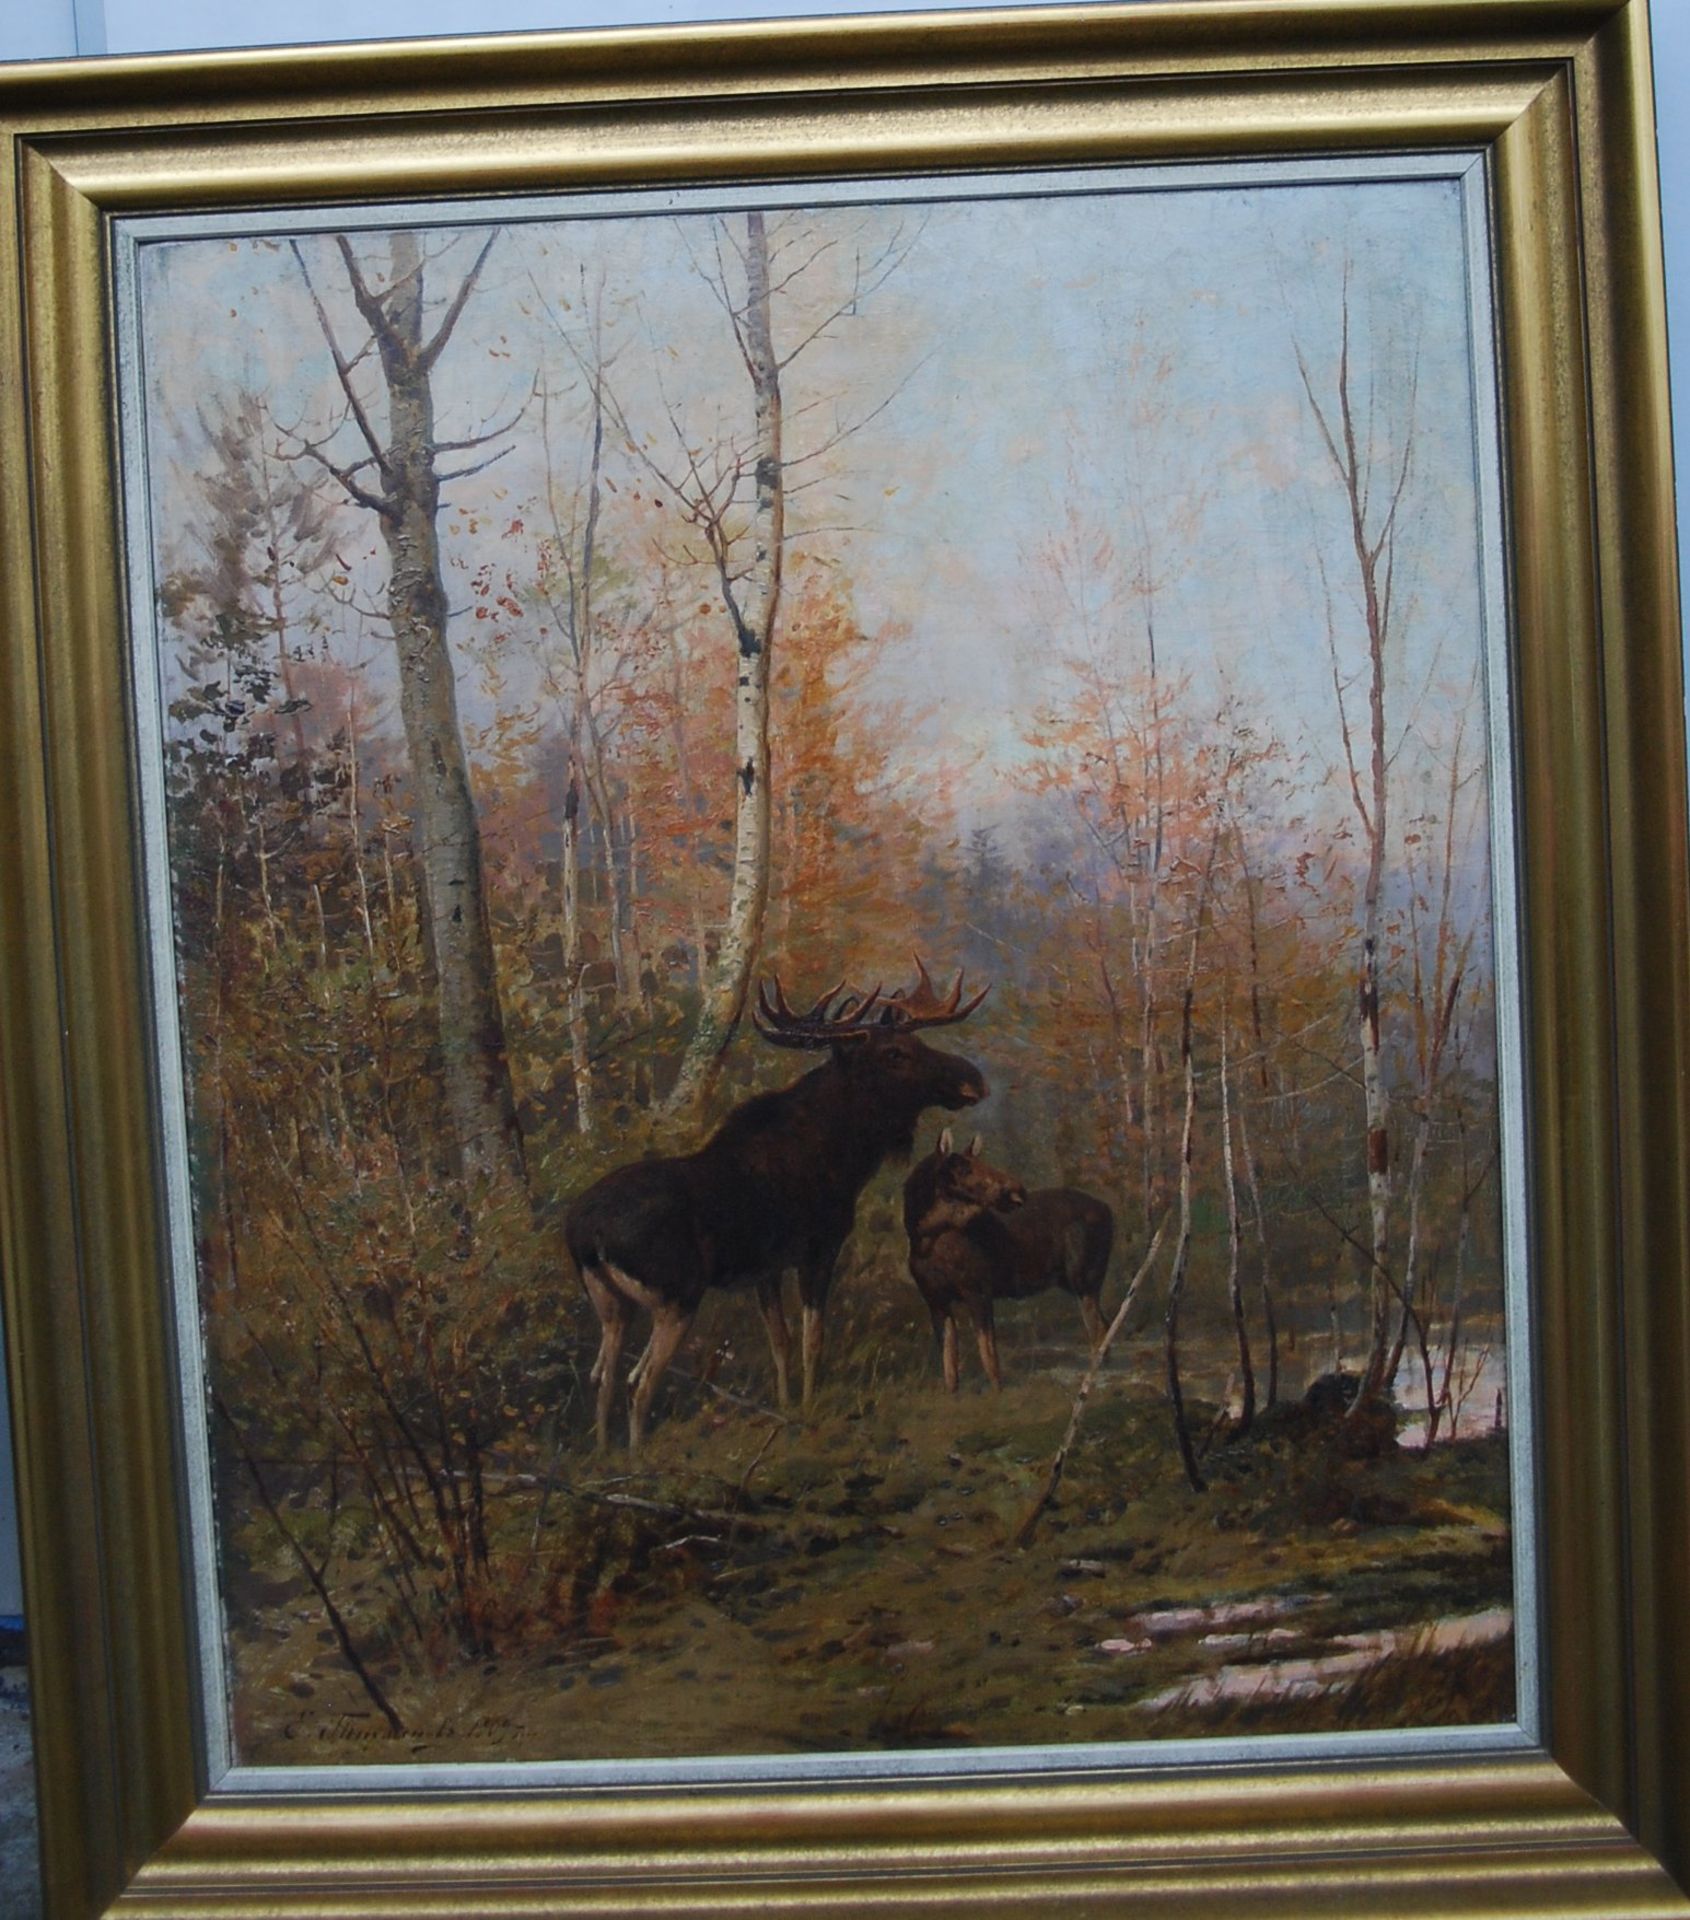 Efim TIKHMENEV (1869-1934), 1909 "Elche im Herbstwald", Öl/Leinen, ,82x67 cm, gerahmt, RG 100x84 cm, - Image 3 of 8